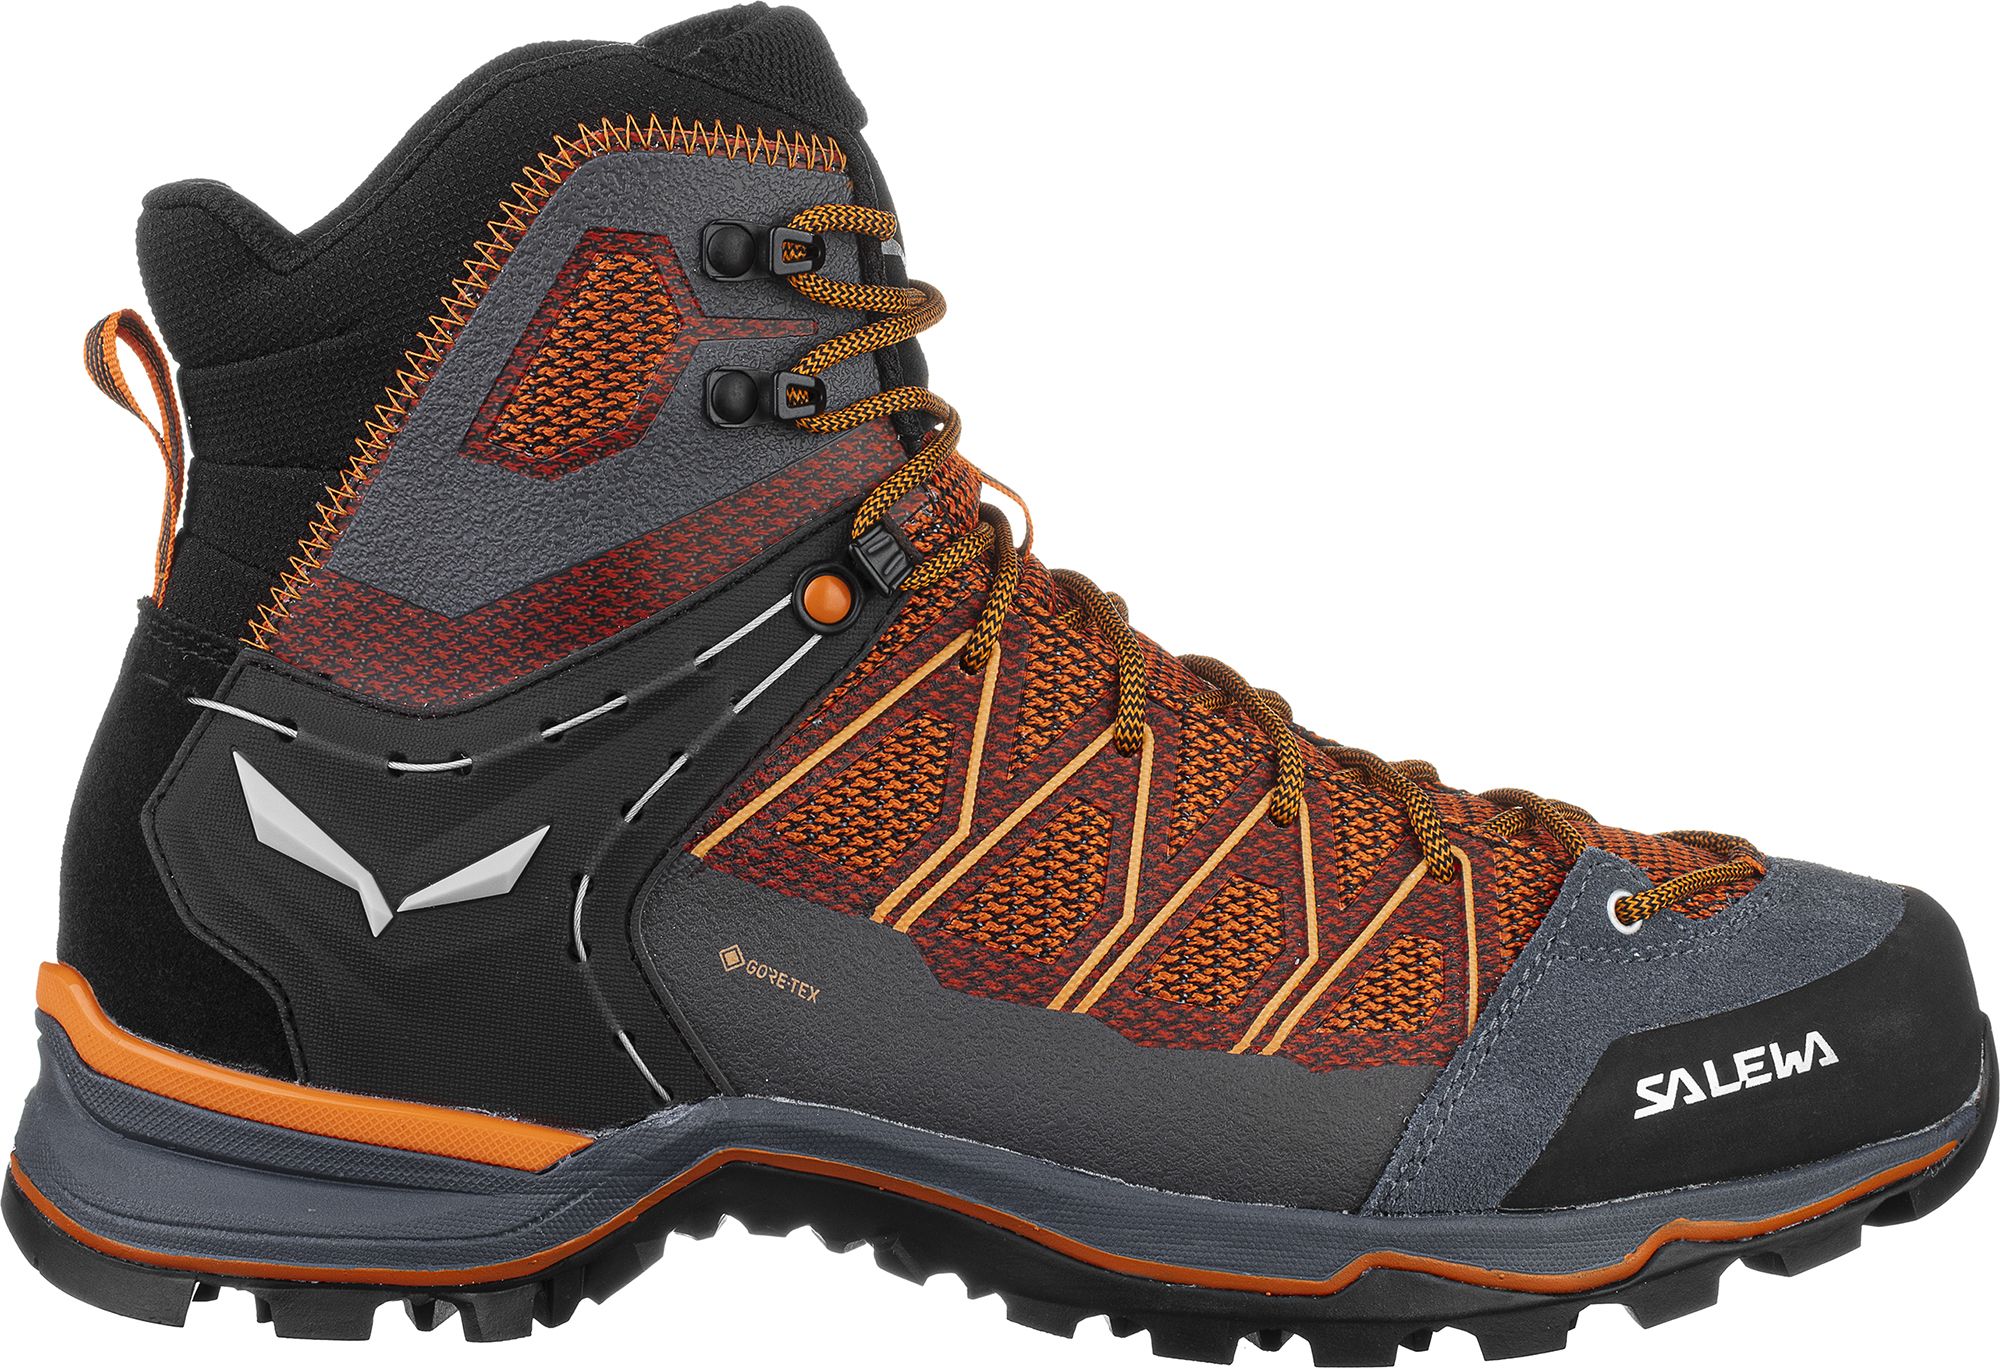 Photos - Trekking Shoes Salewa Men's Mountain Trainer Lite Mid GORE-TEX Hiking Boots, Size 11, Bla 